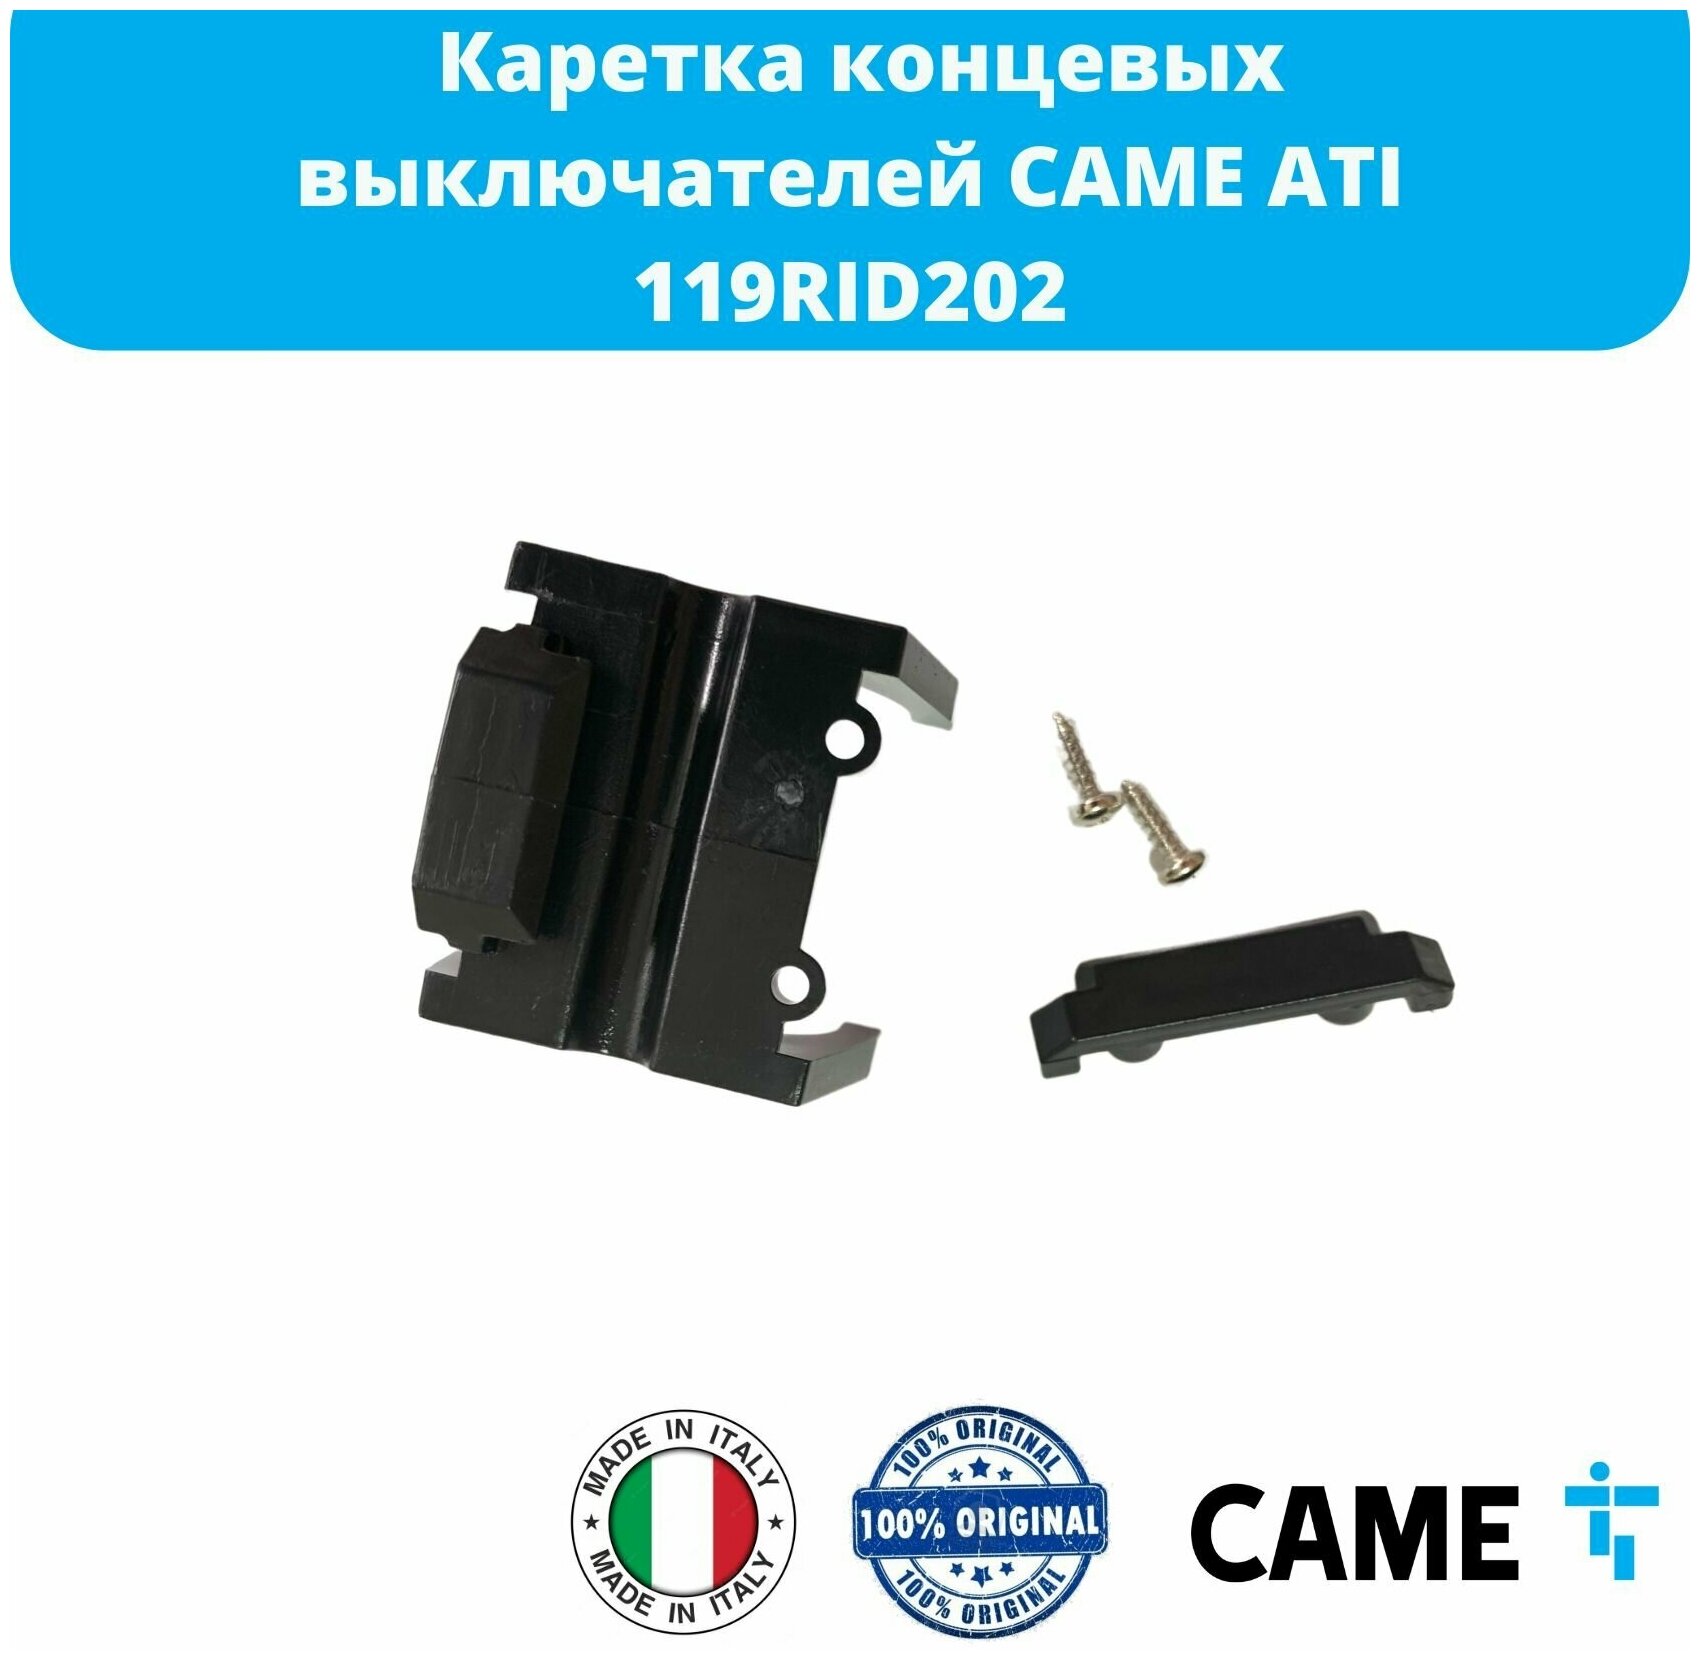 Каретка концевых выключателей CAME ATI (119RID202)